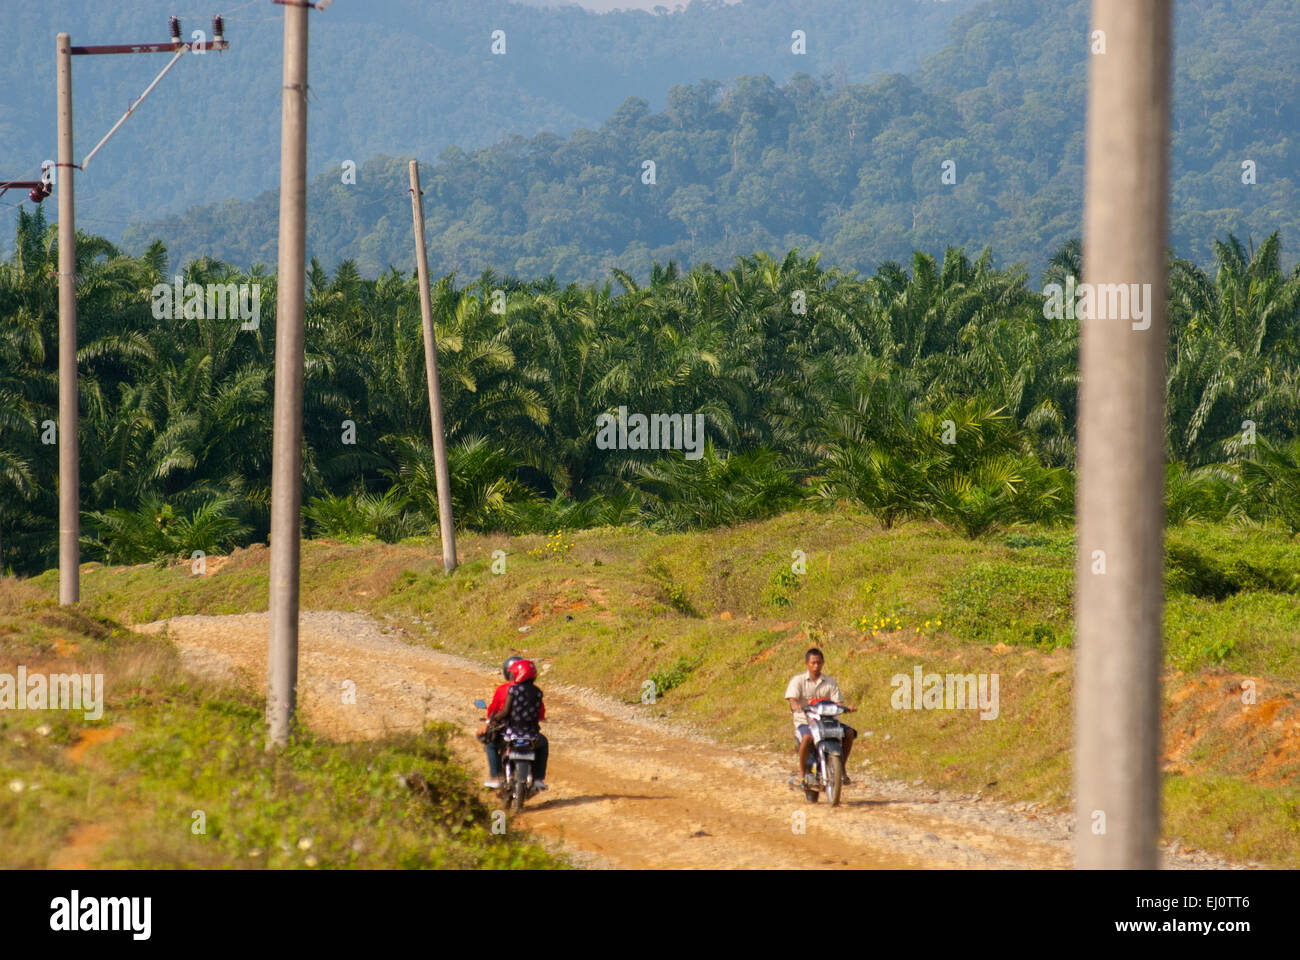 Oil palm plantation in North Sumatra province, Indonesia. Stock Photo